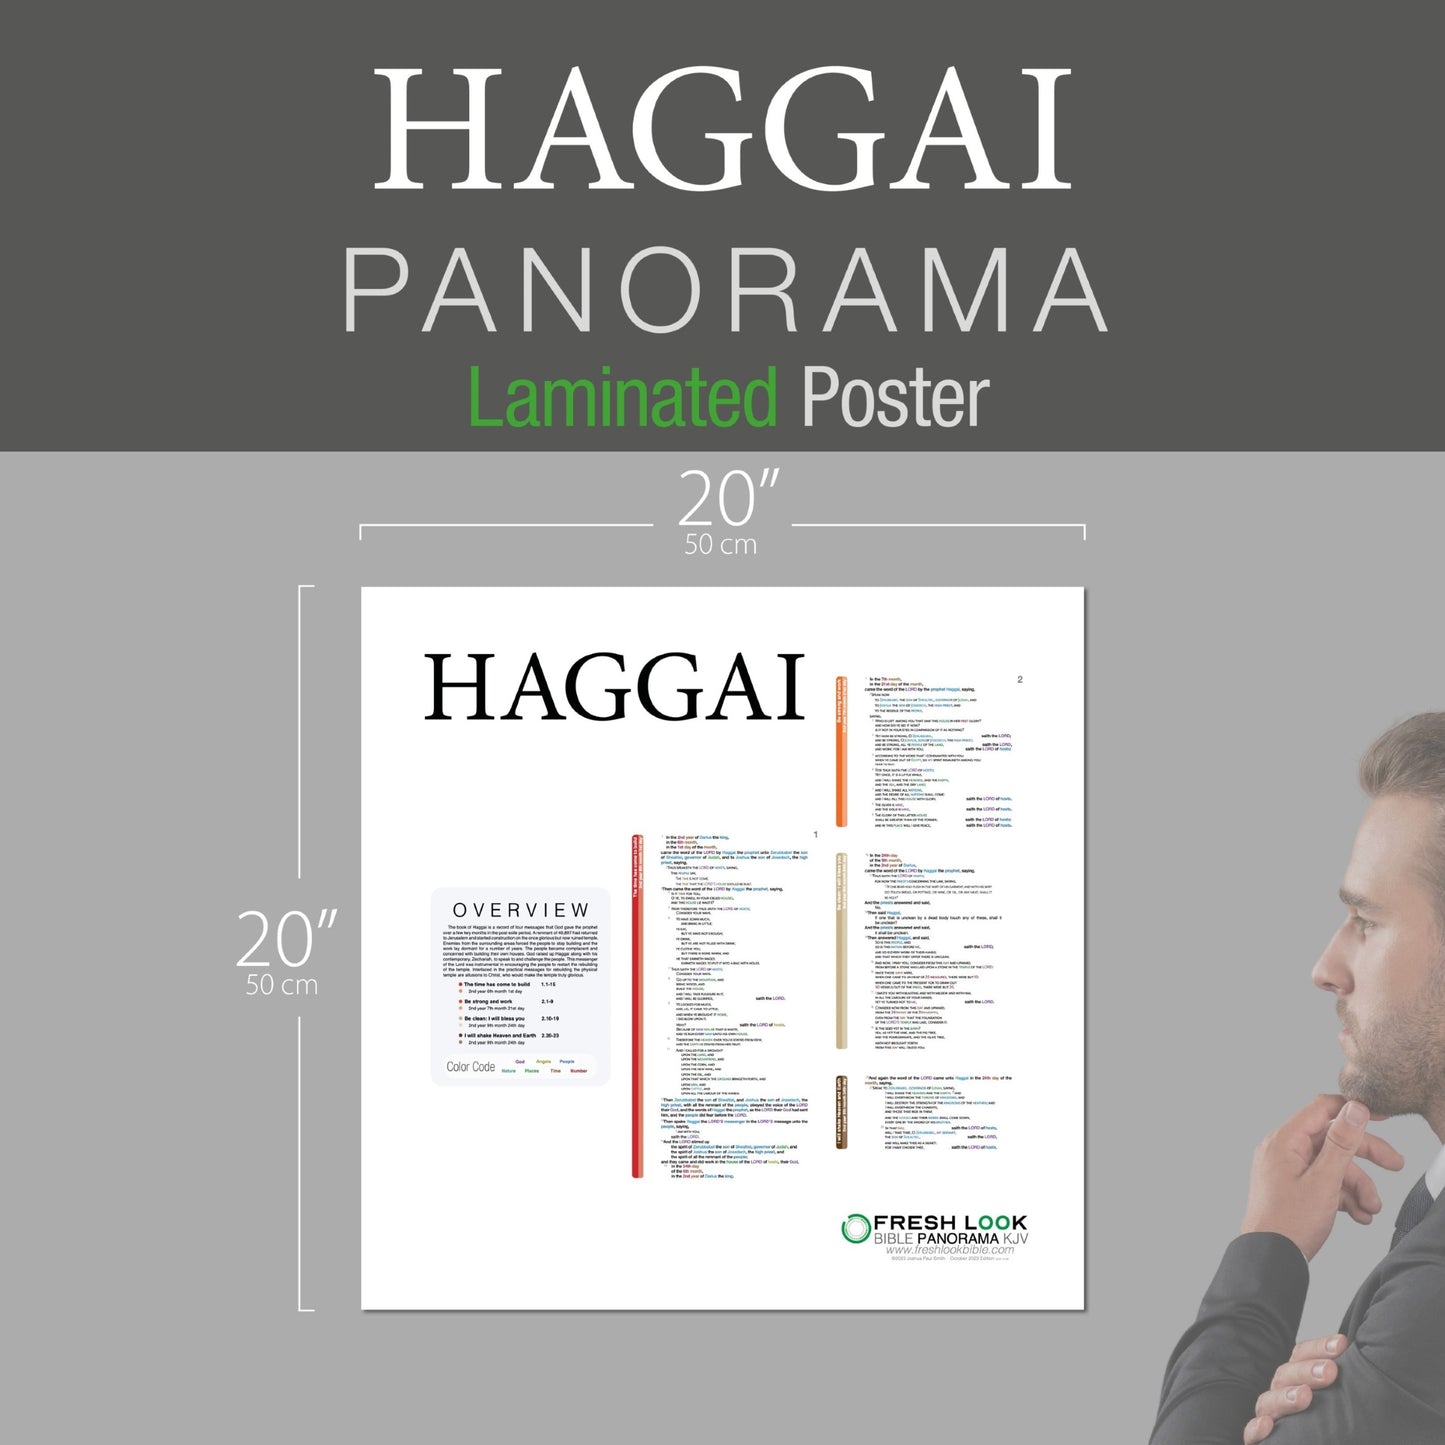 Haggai Panorama Laminated